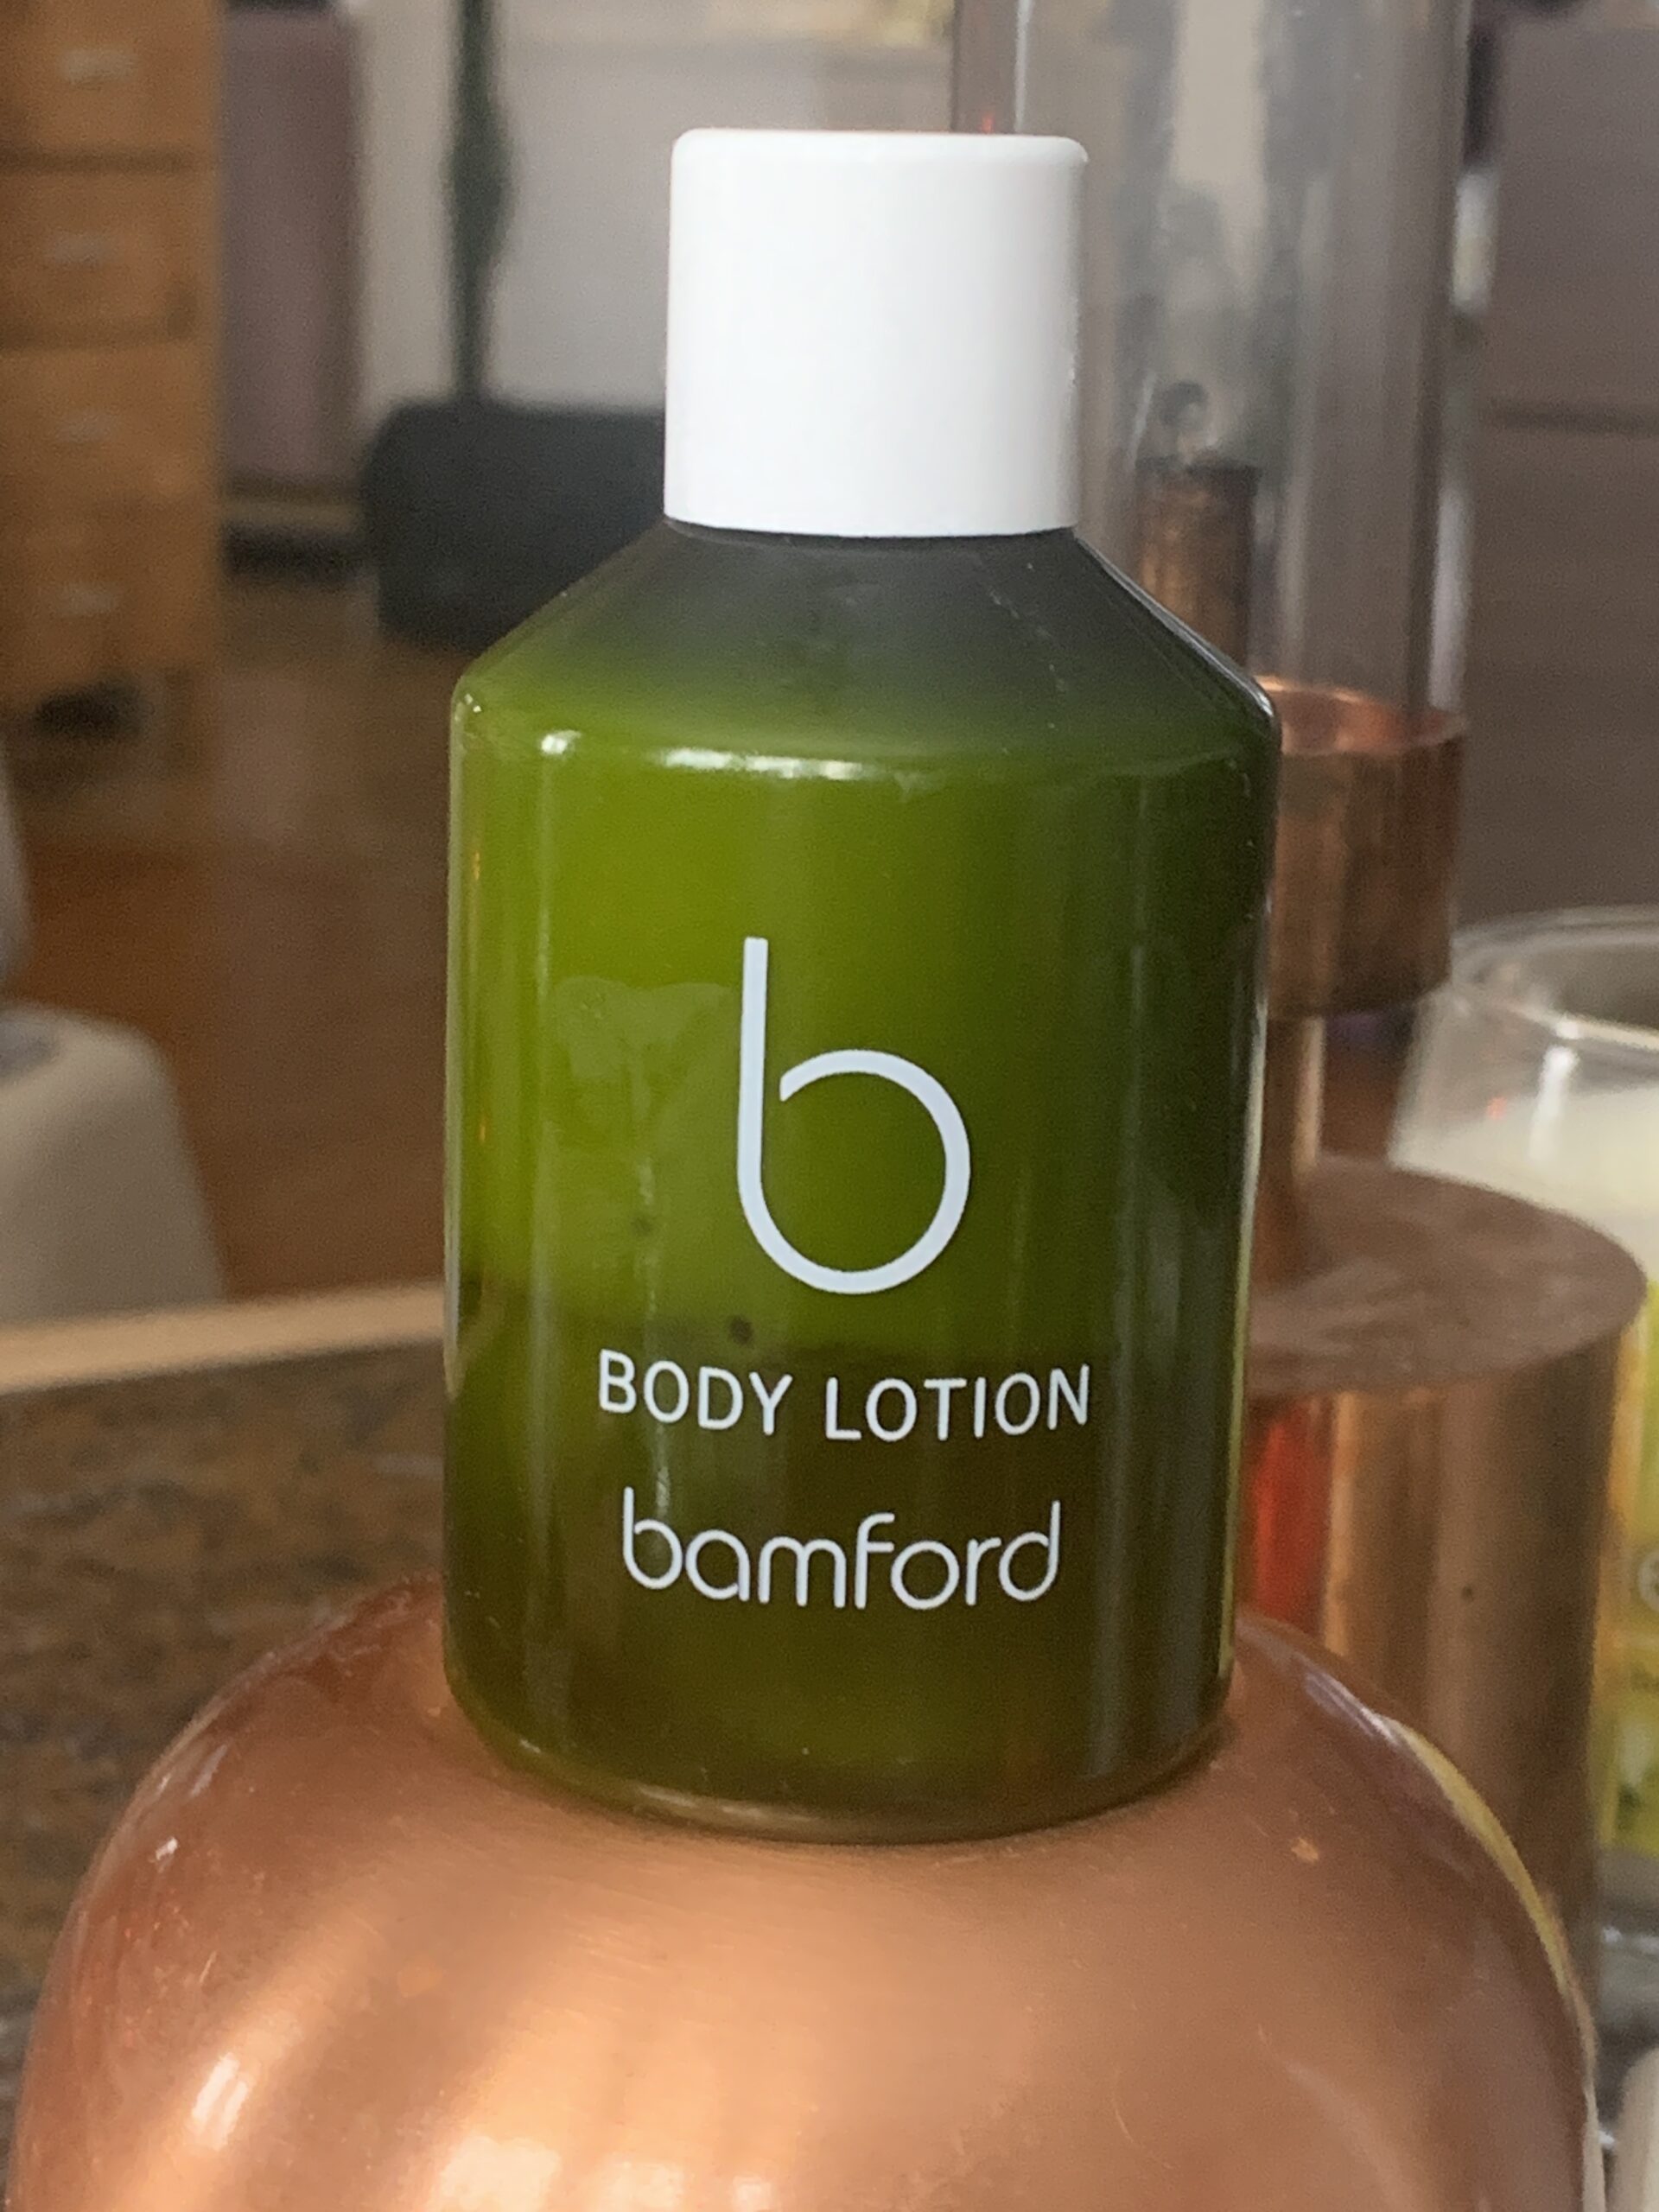 Bamford Body lotion